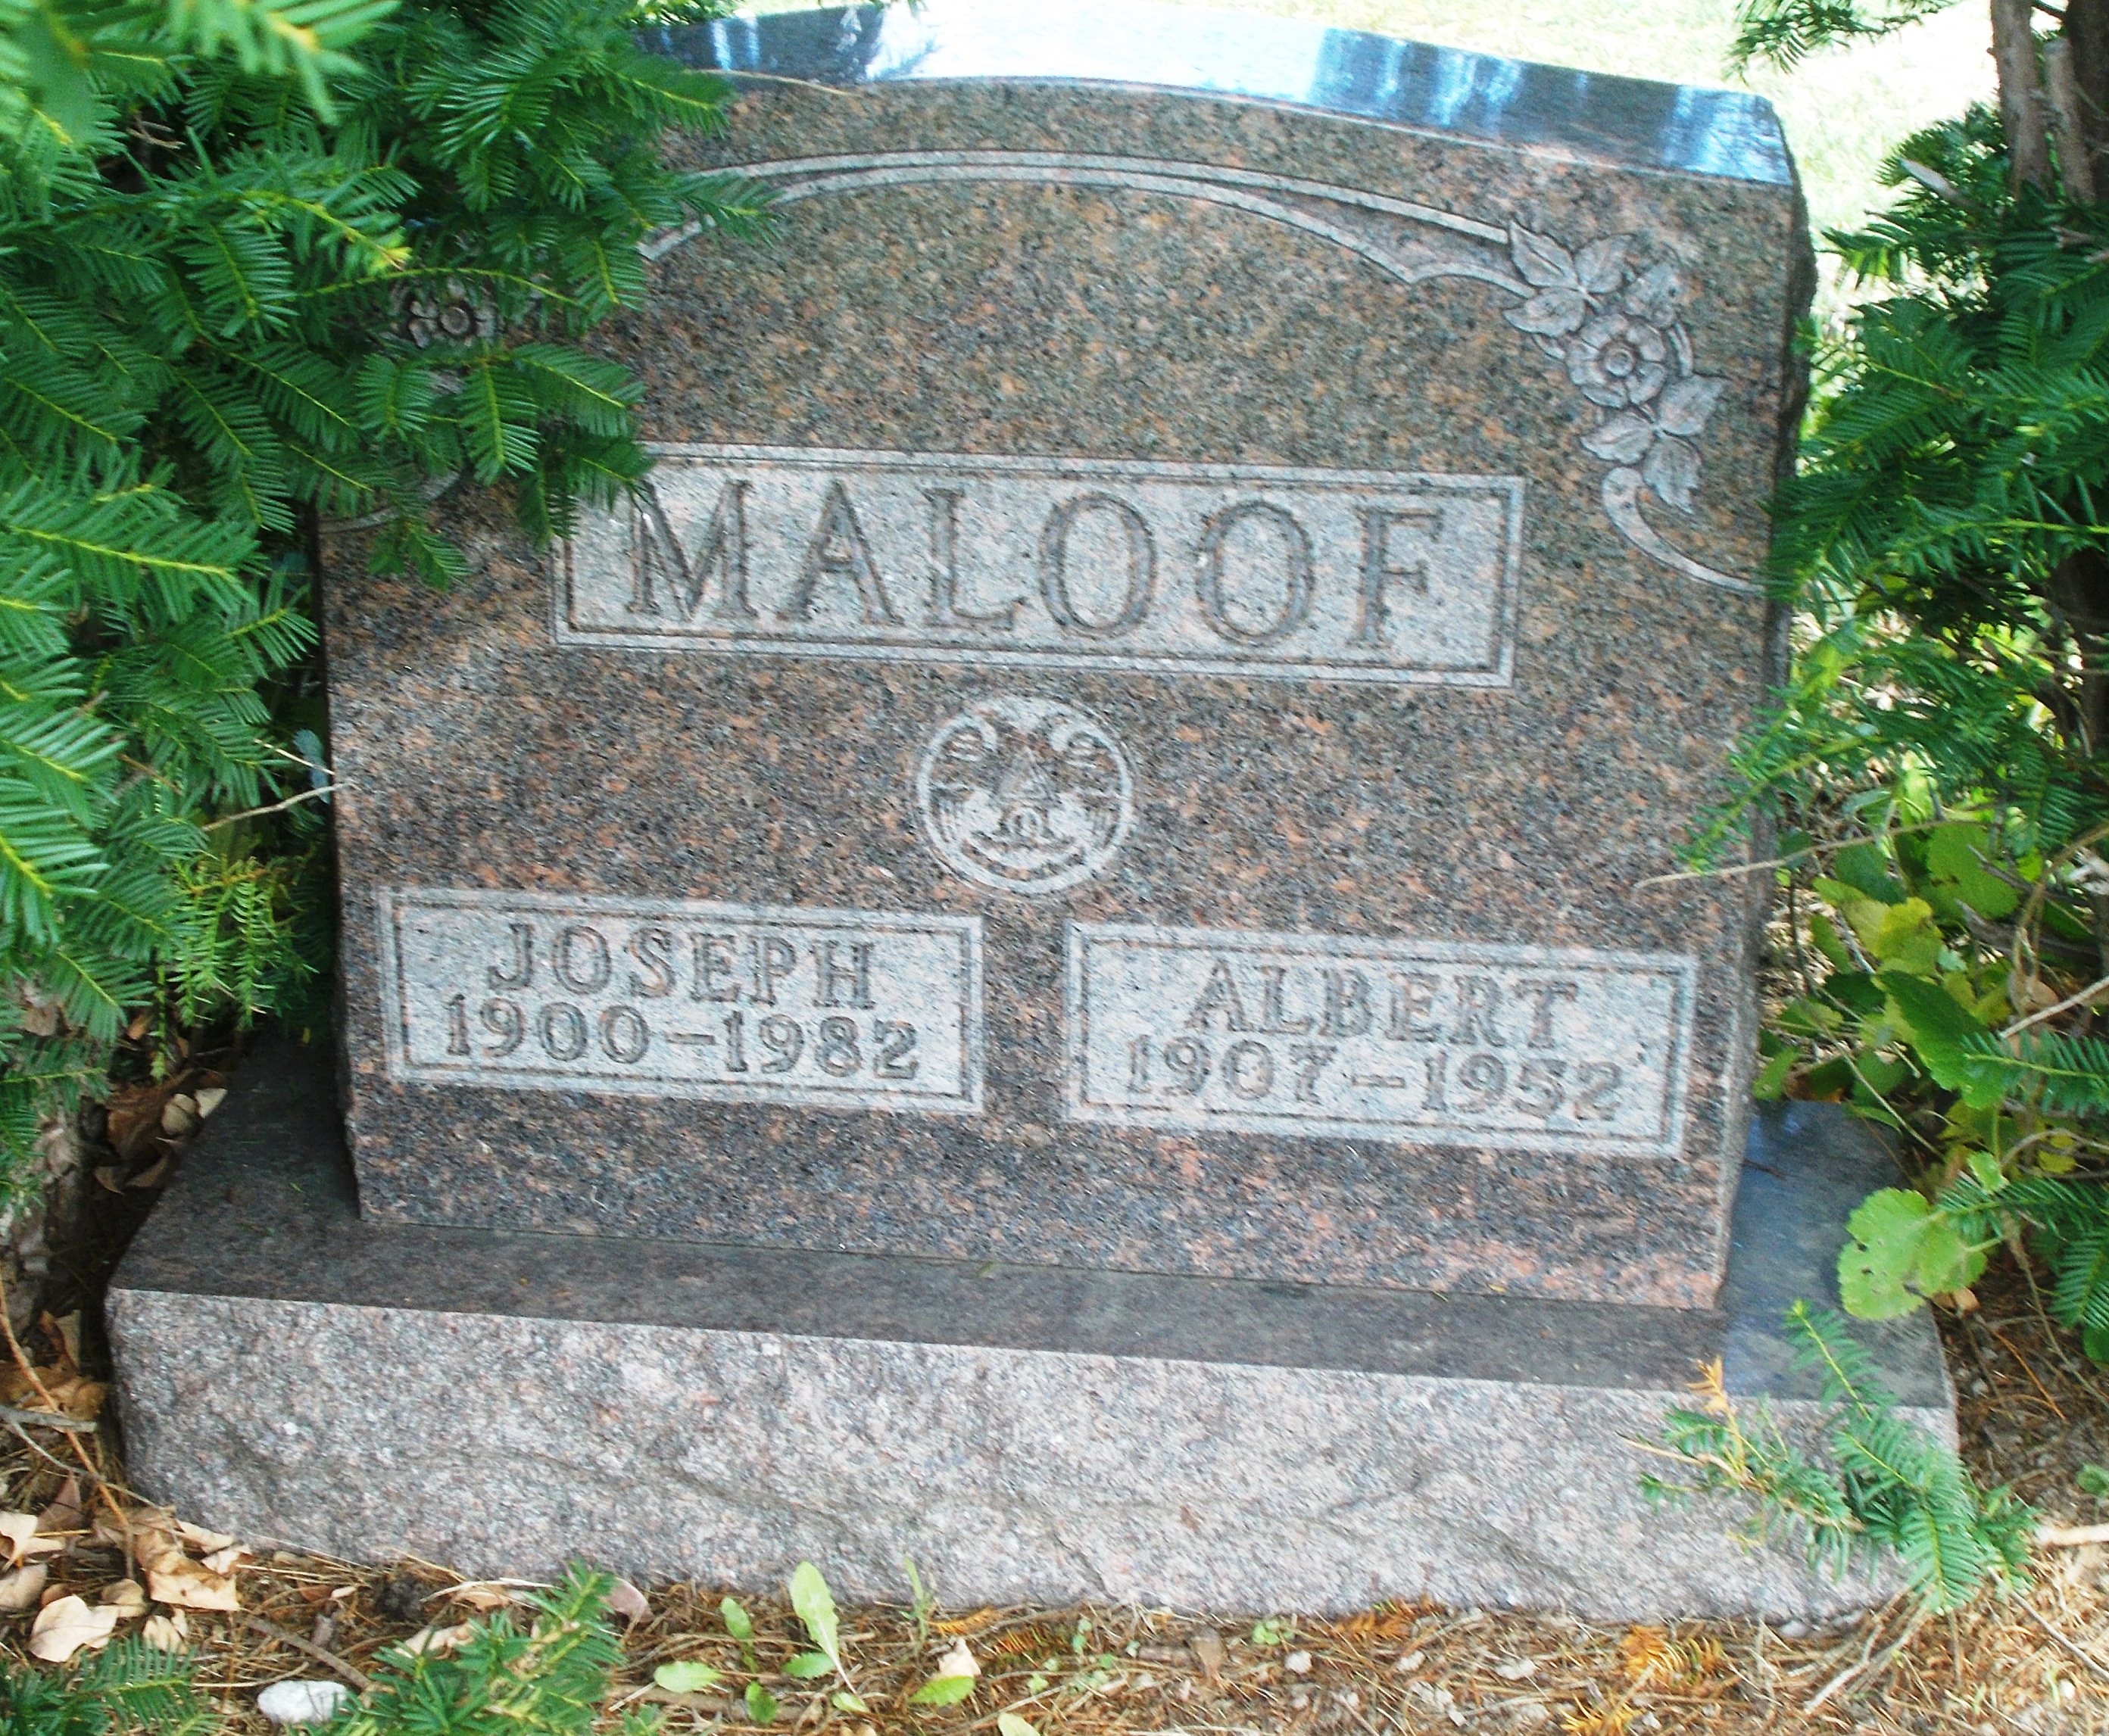 Albert Maloof